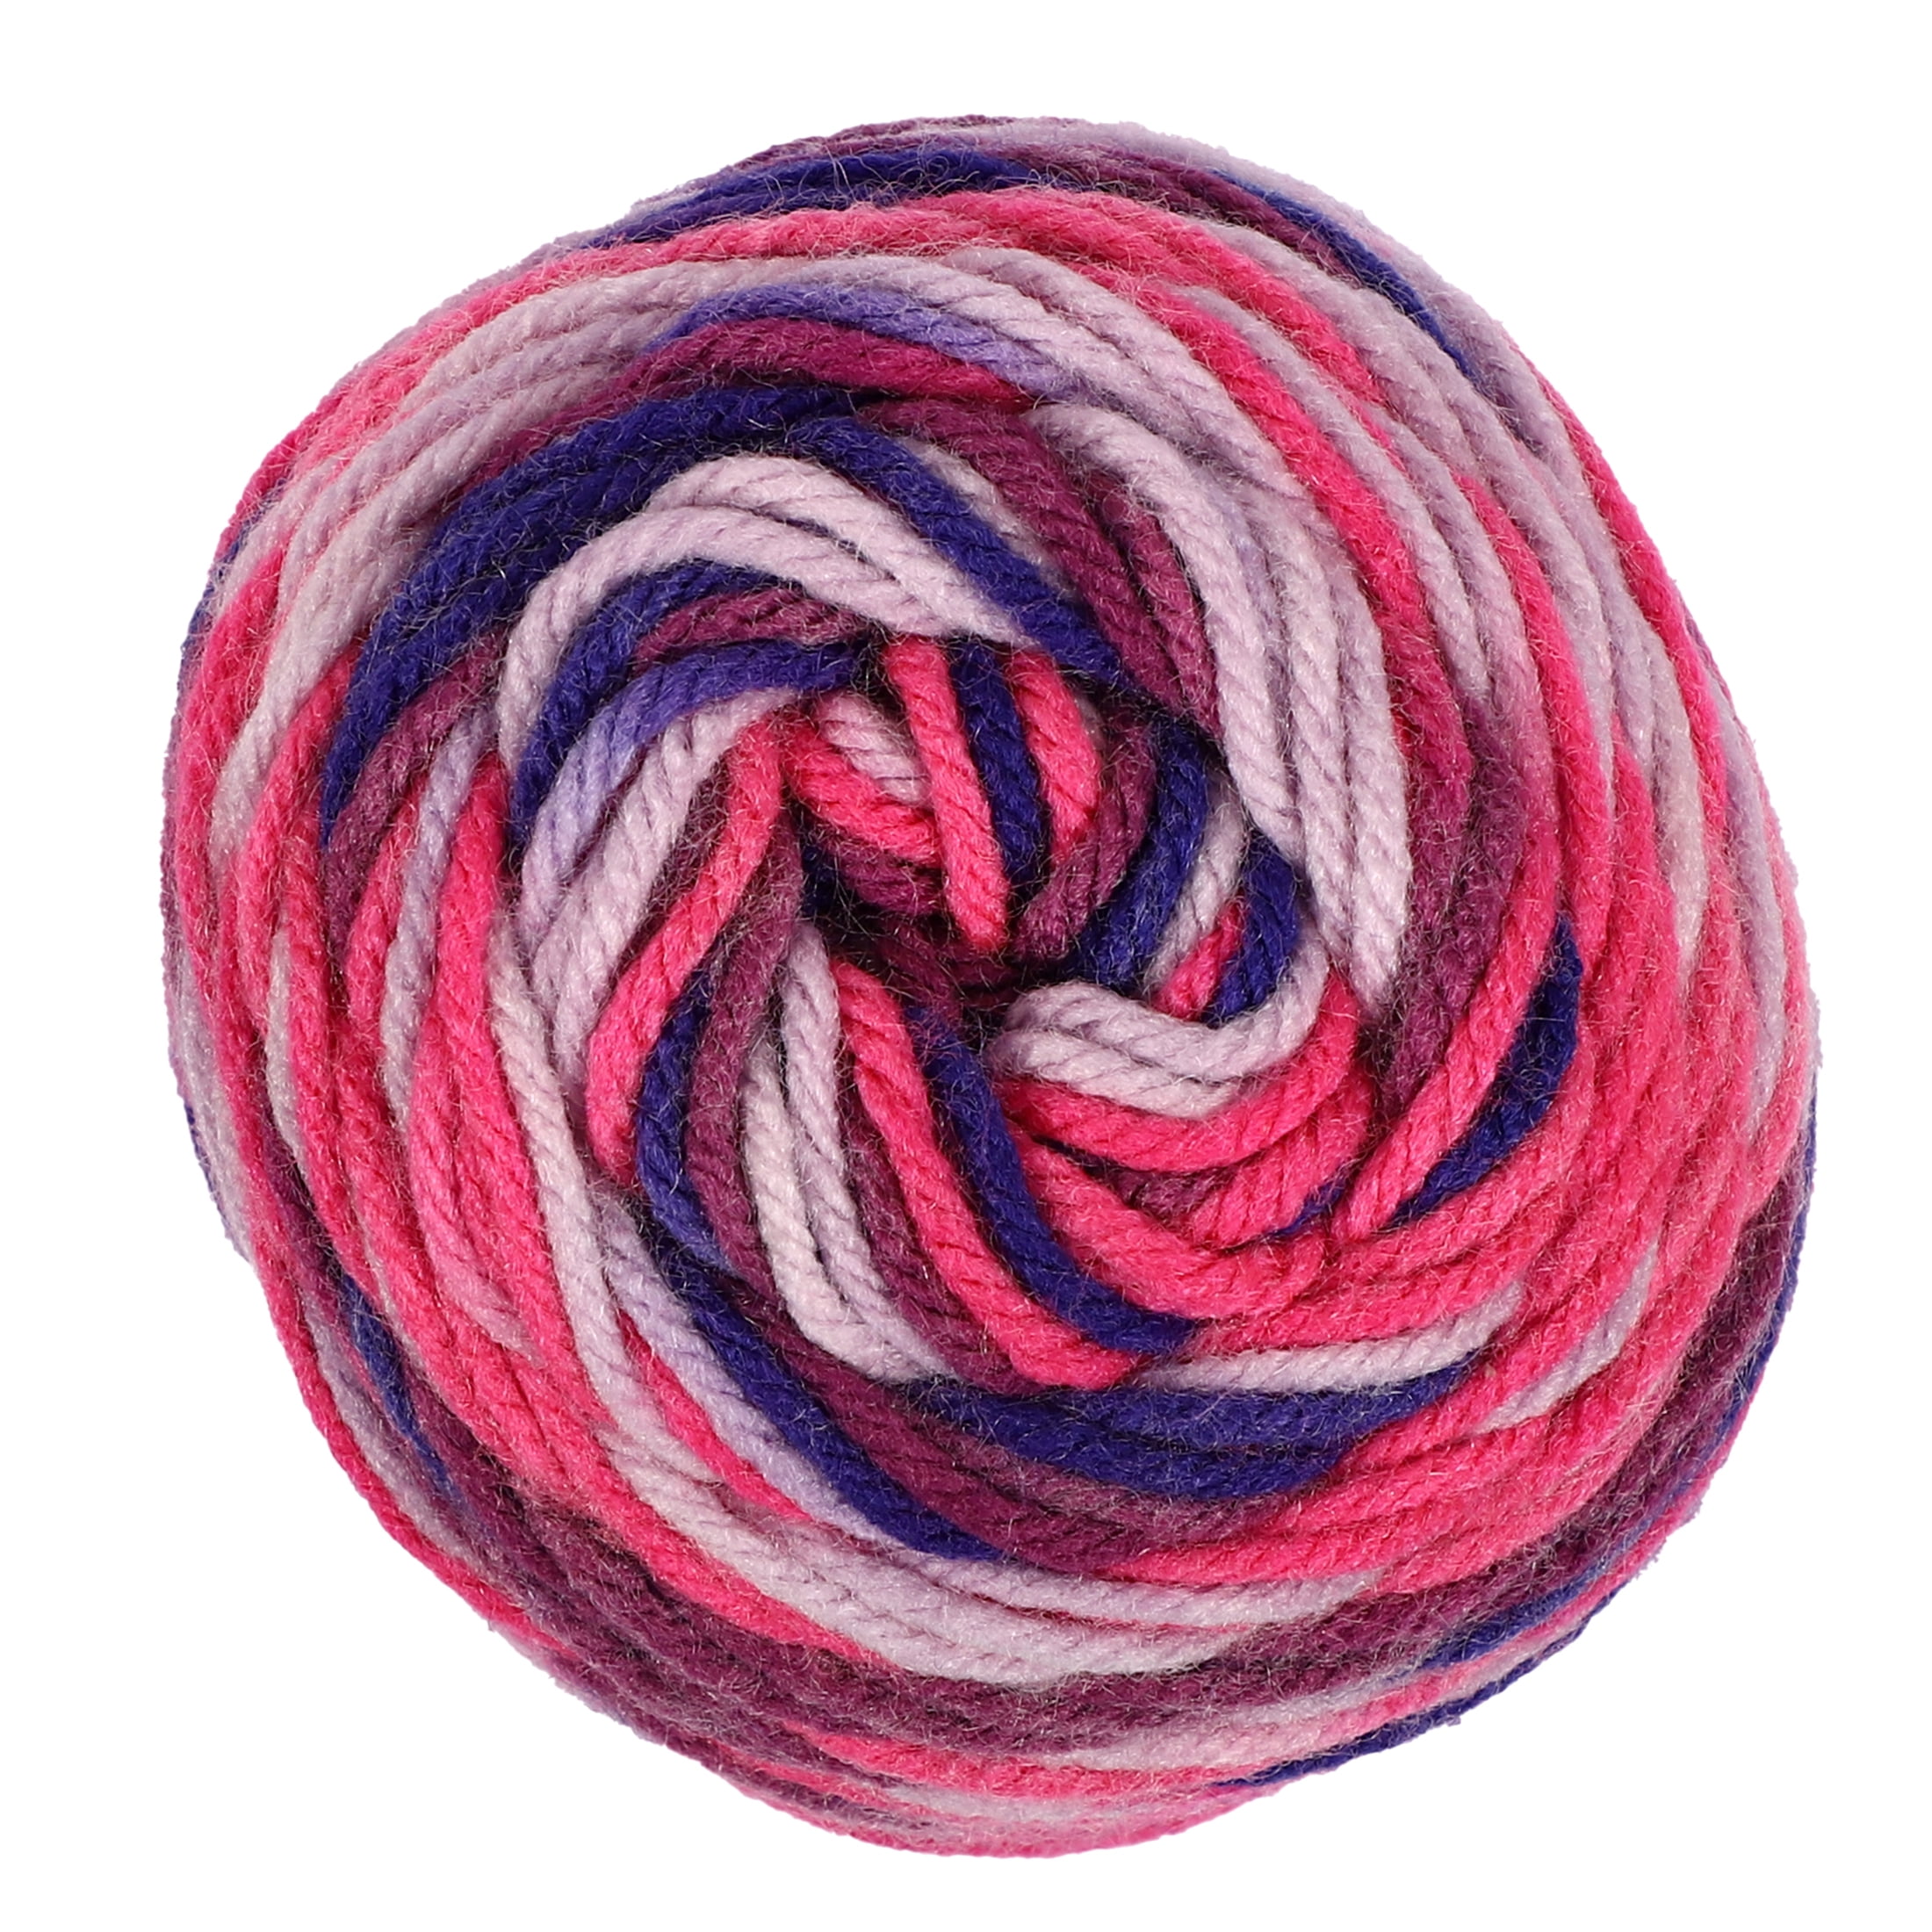 Mainstays 100% Acrylic 4 Medium Acrylic Yarn, Pink Multi 5oz/142g, 285  Yards 